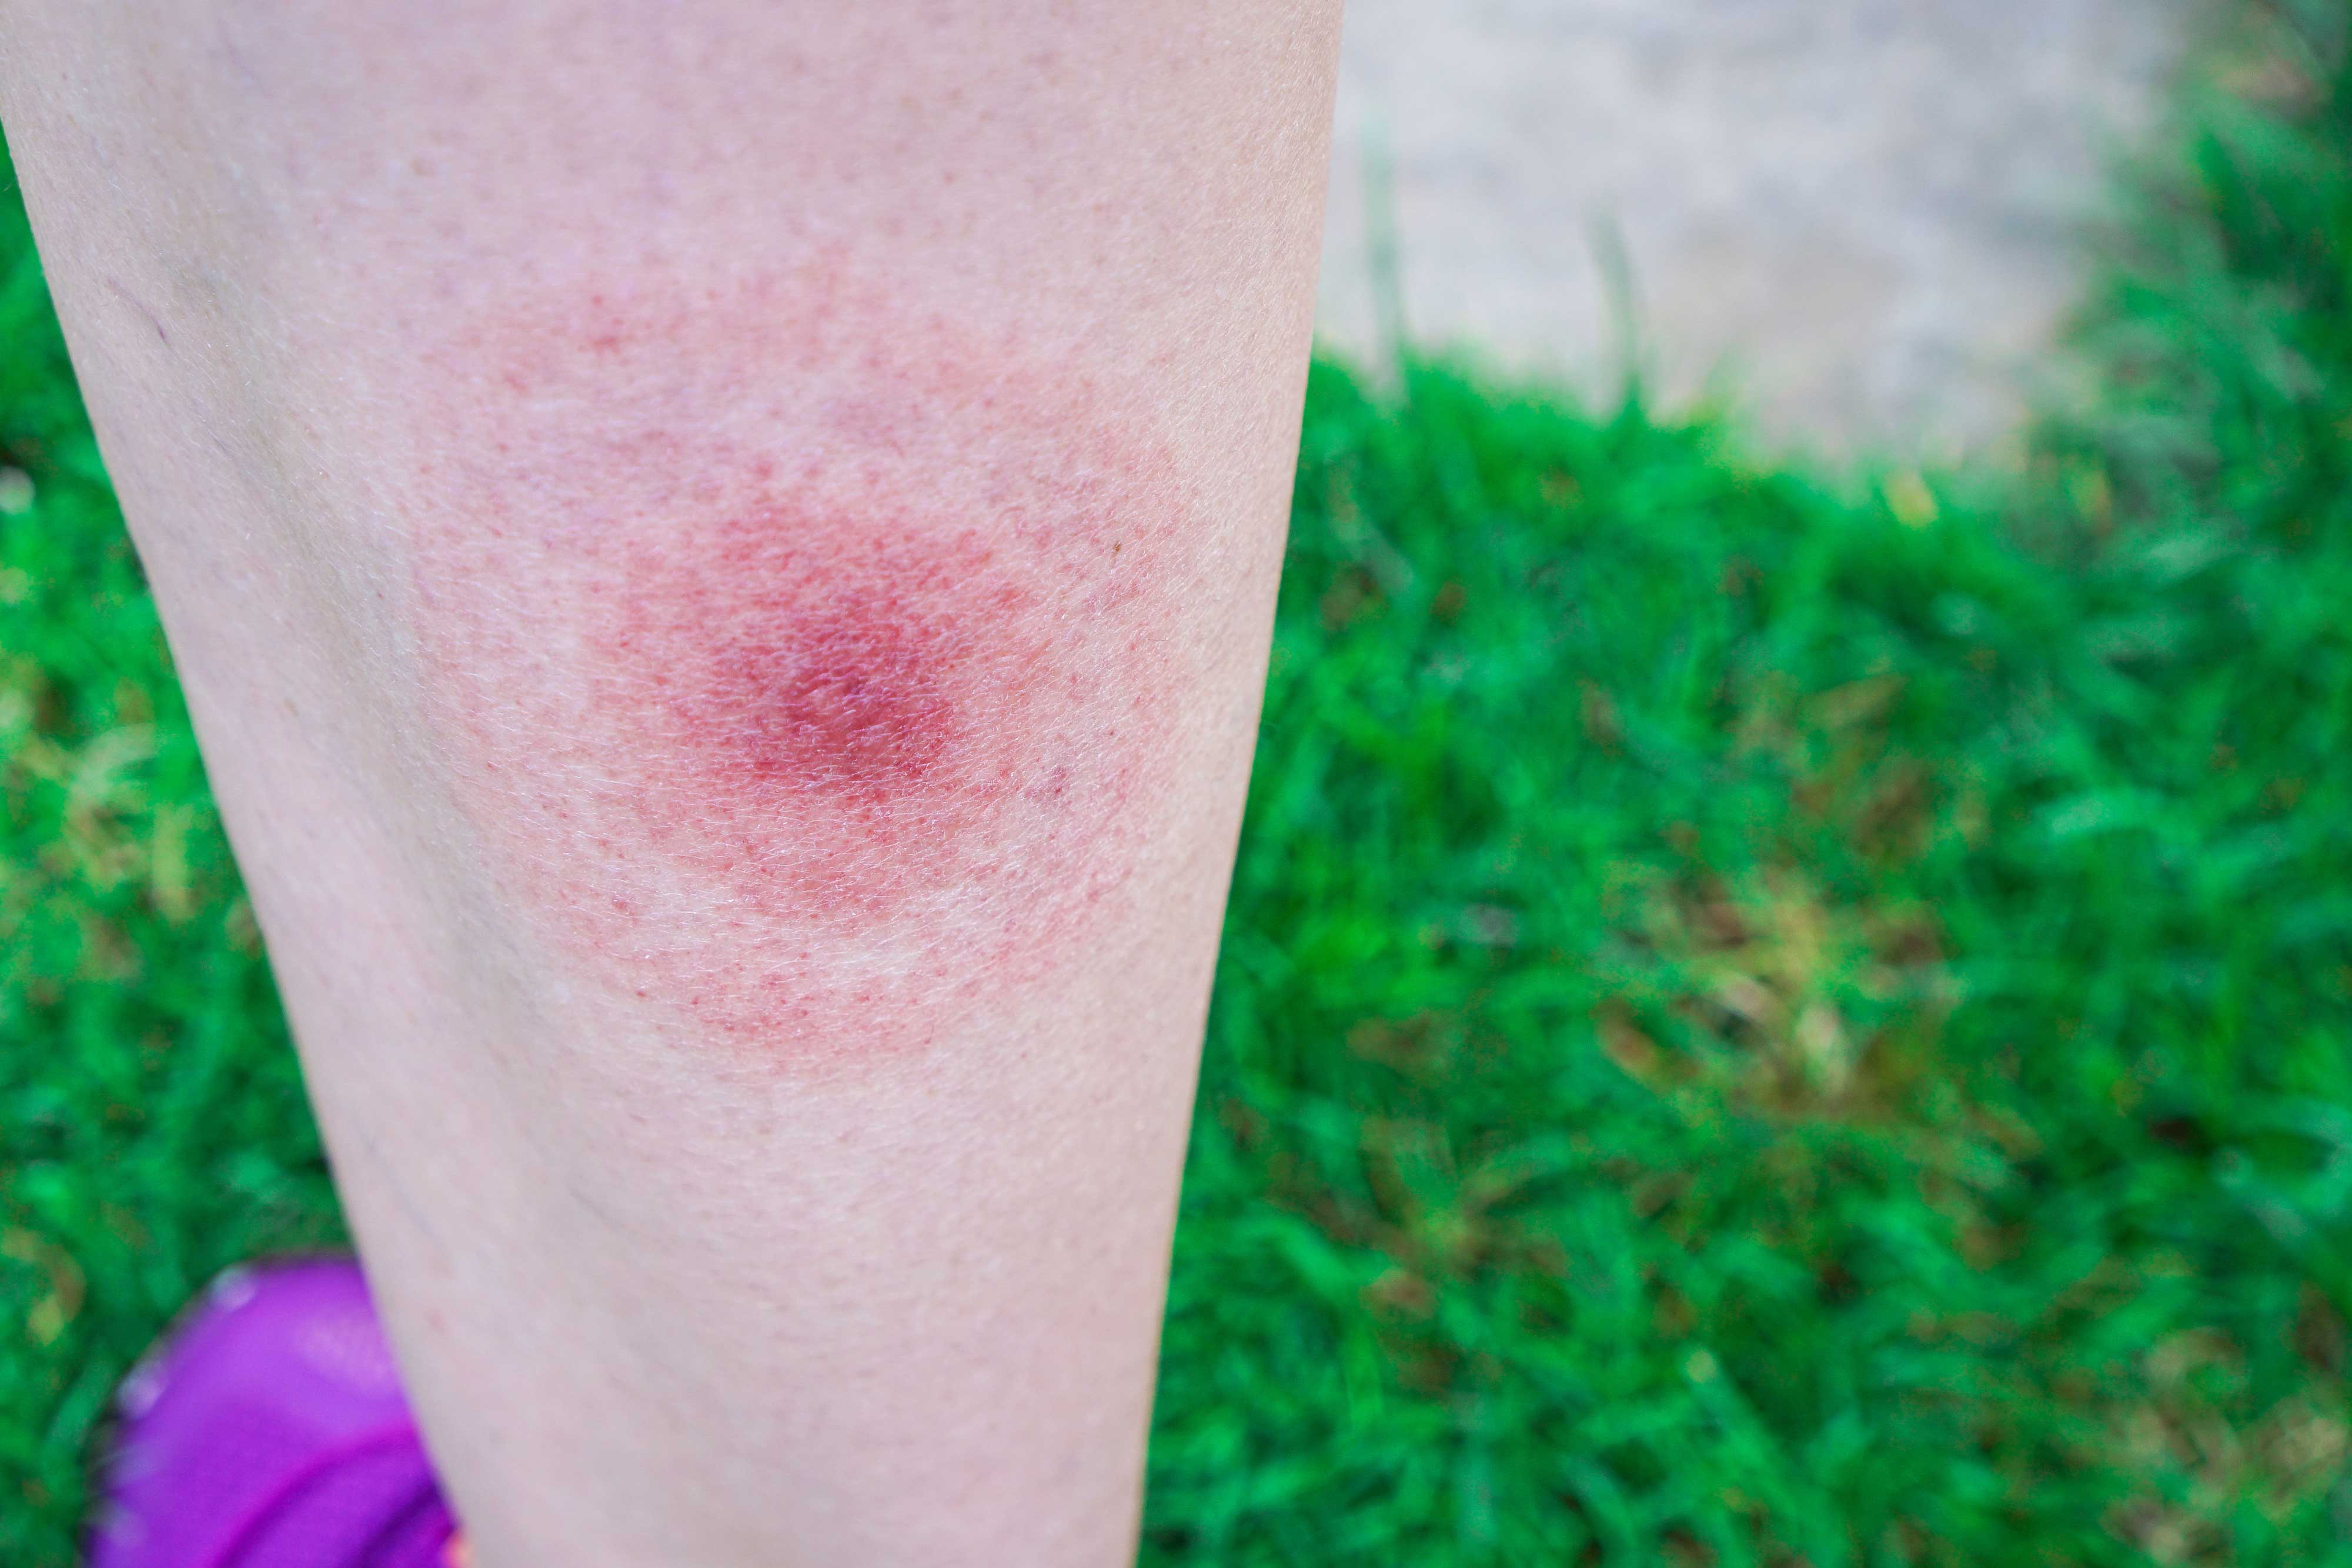 A bullseye-shaped rash on human skin. 